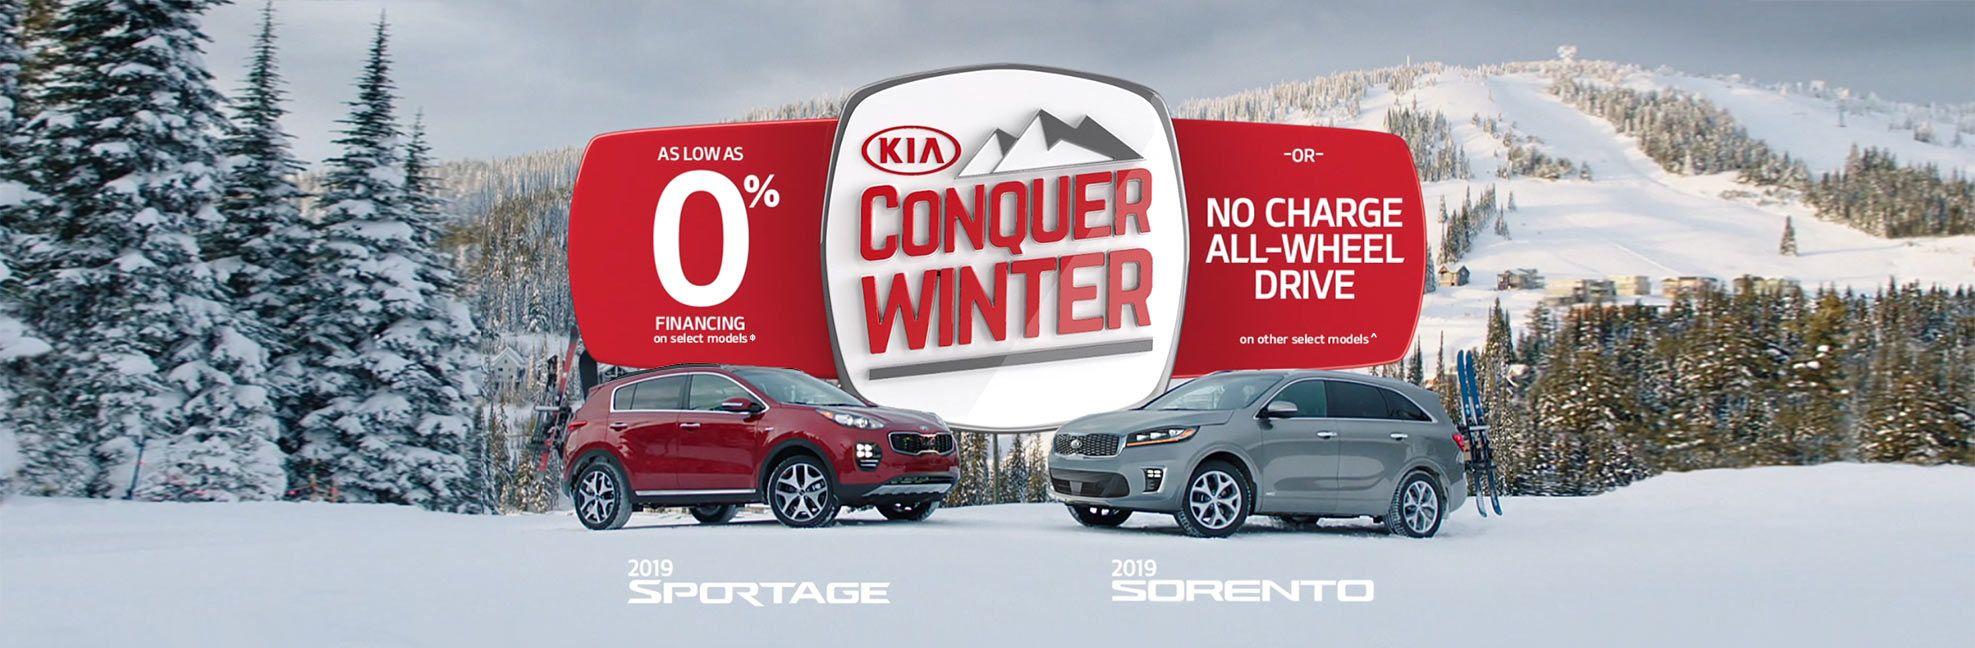 Kia Motors Logo - Performance Kia | Thunder Bay, Ontario Kia Dealer | Sales Service ...